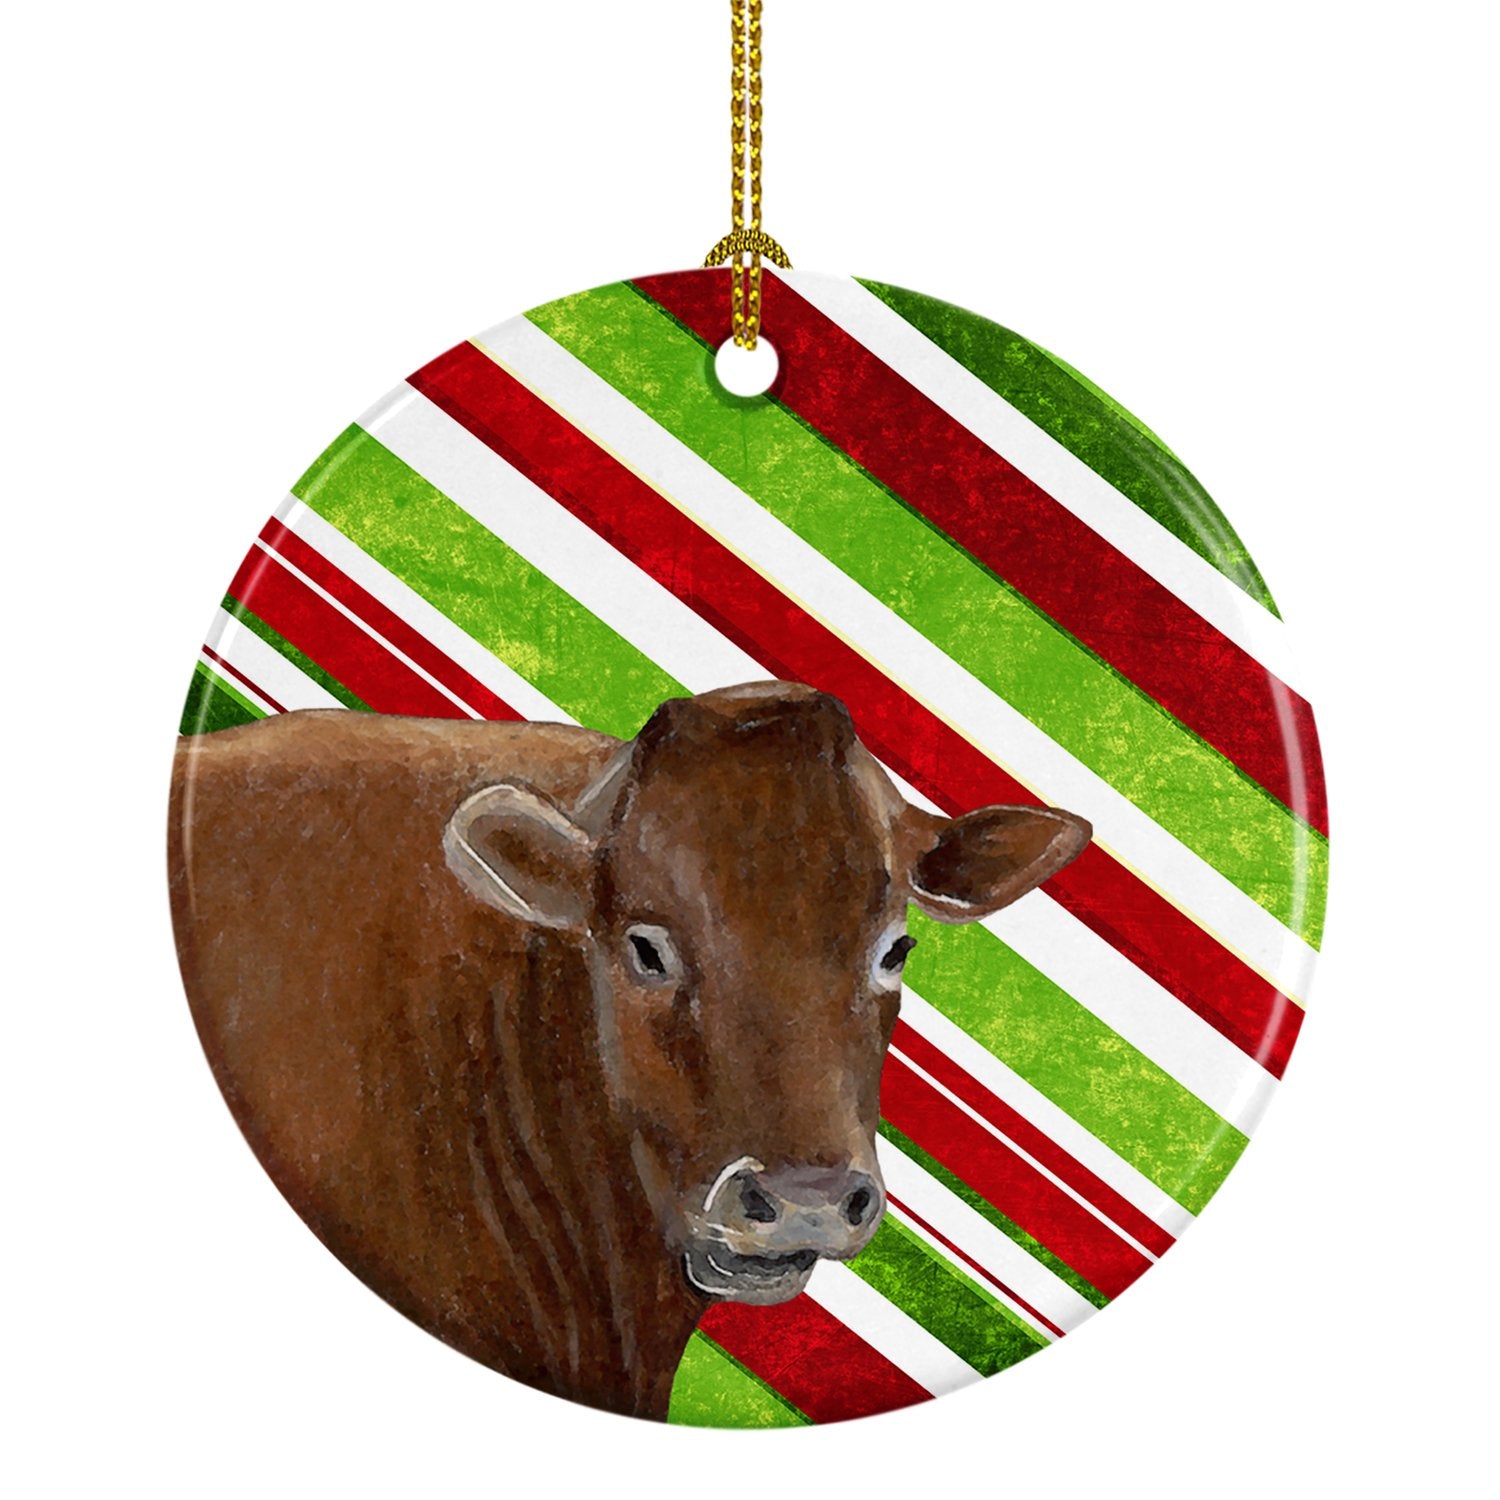 Cow Candy Cane Holiday Christmas Ceramic Ornament SB3137CO1 by Caroline's Treasures